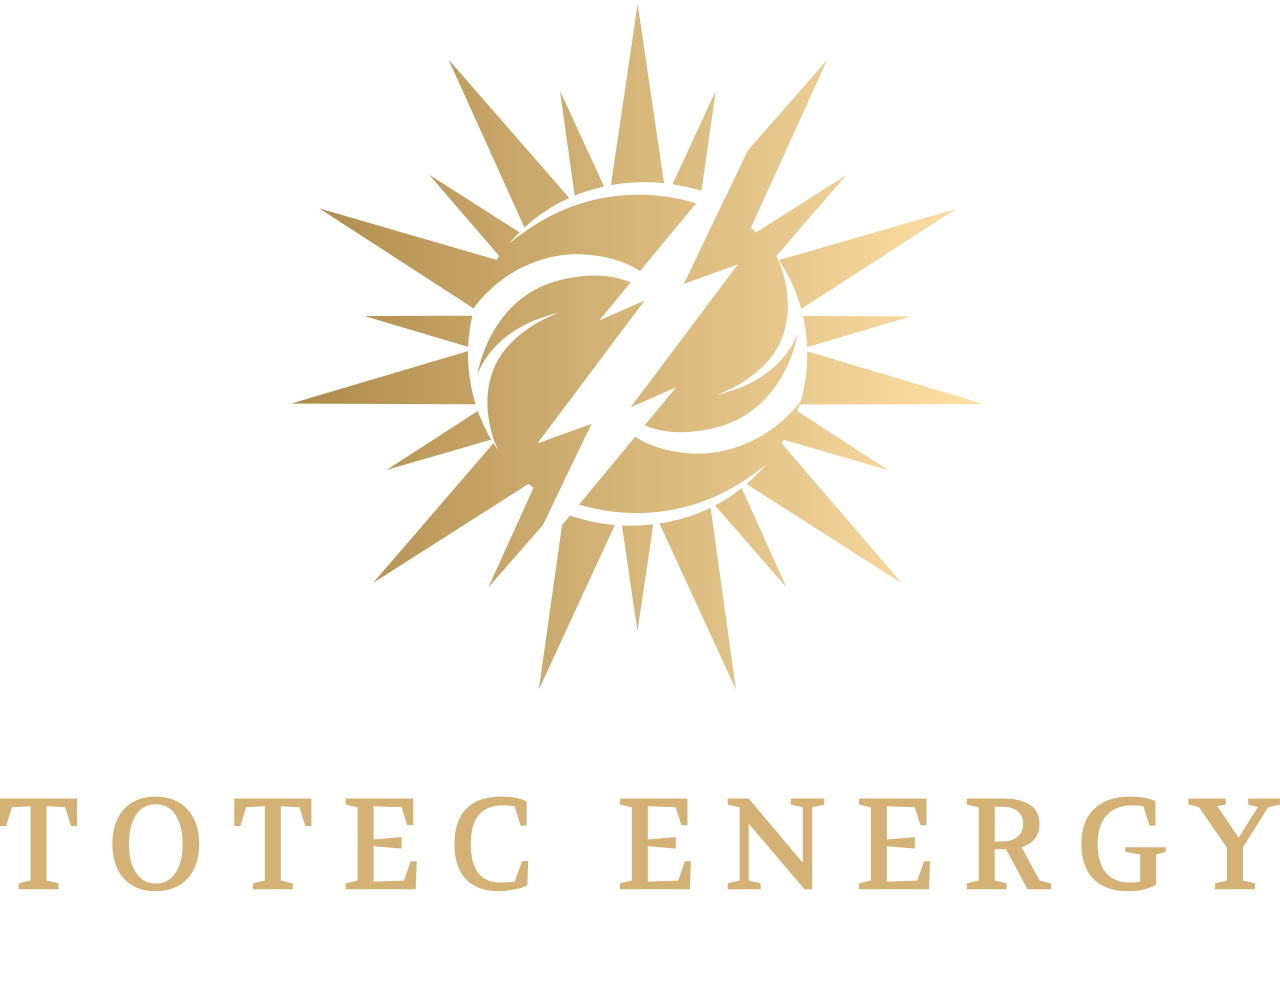 Totec energy's logo